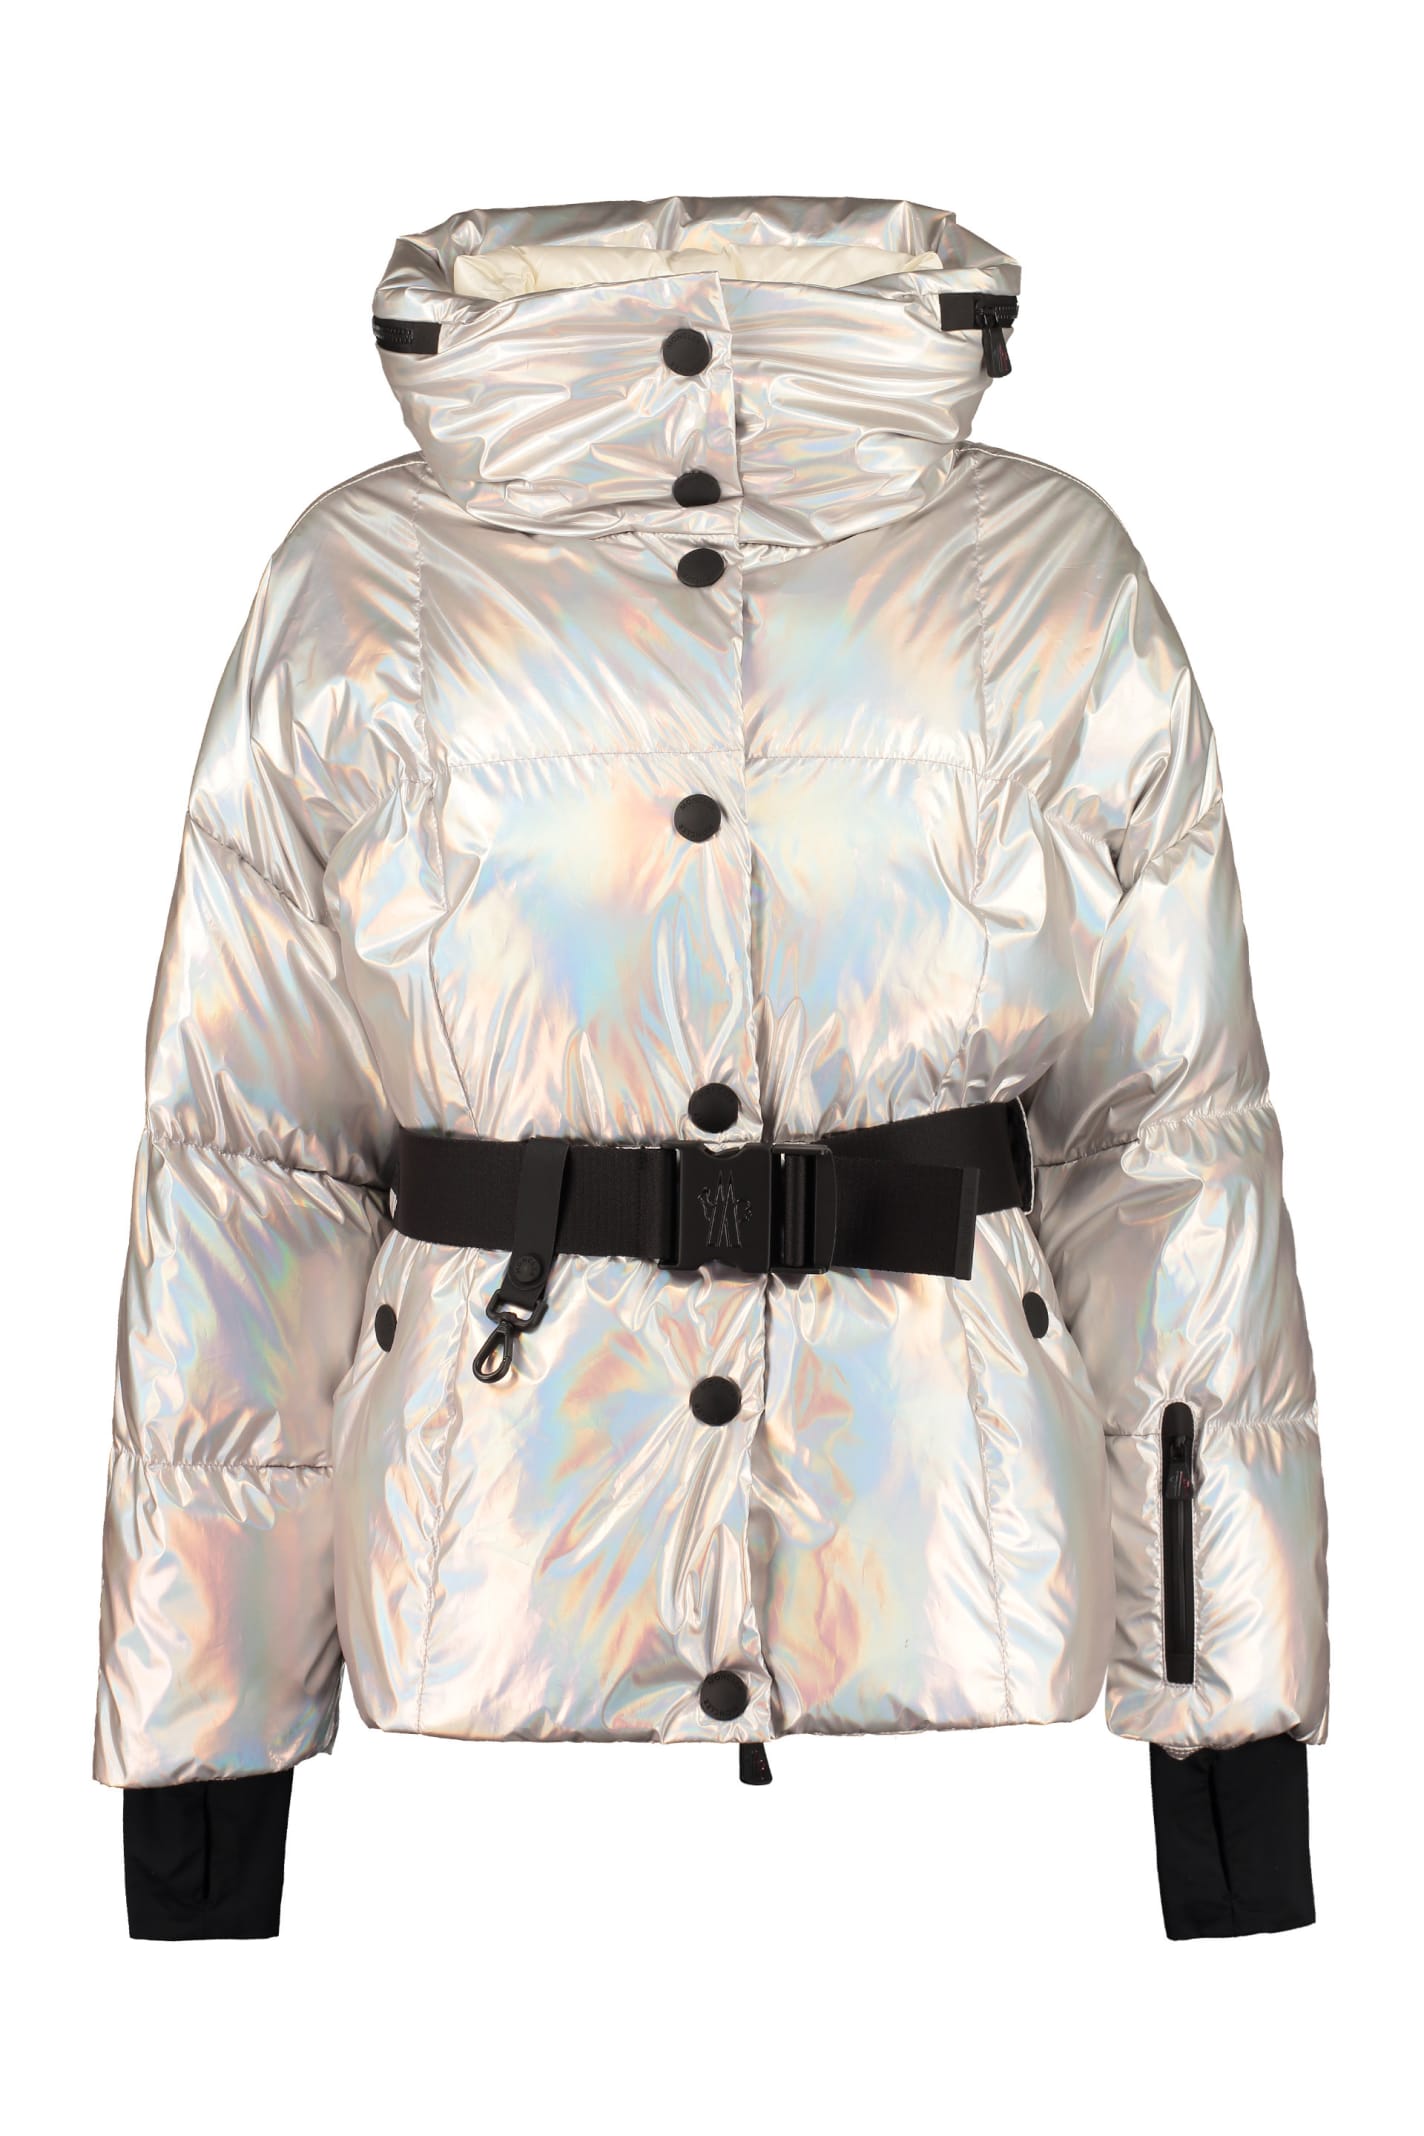 Moncler Grenoble Ollignan Iridescent Nylon Down Jacket